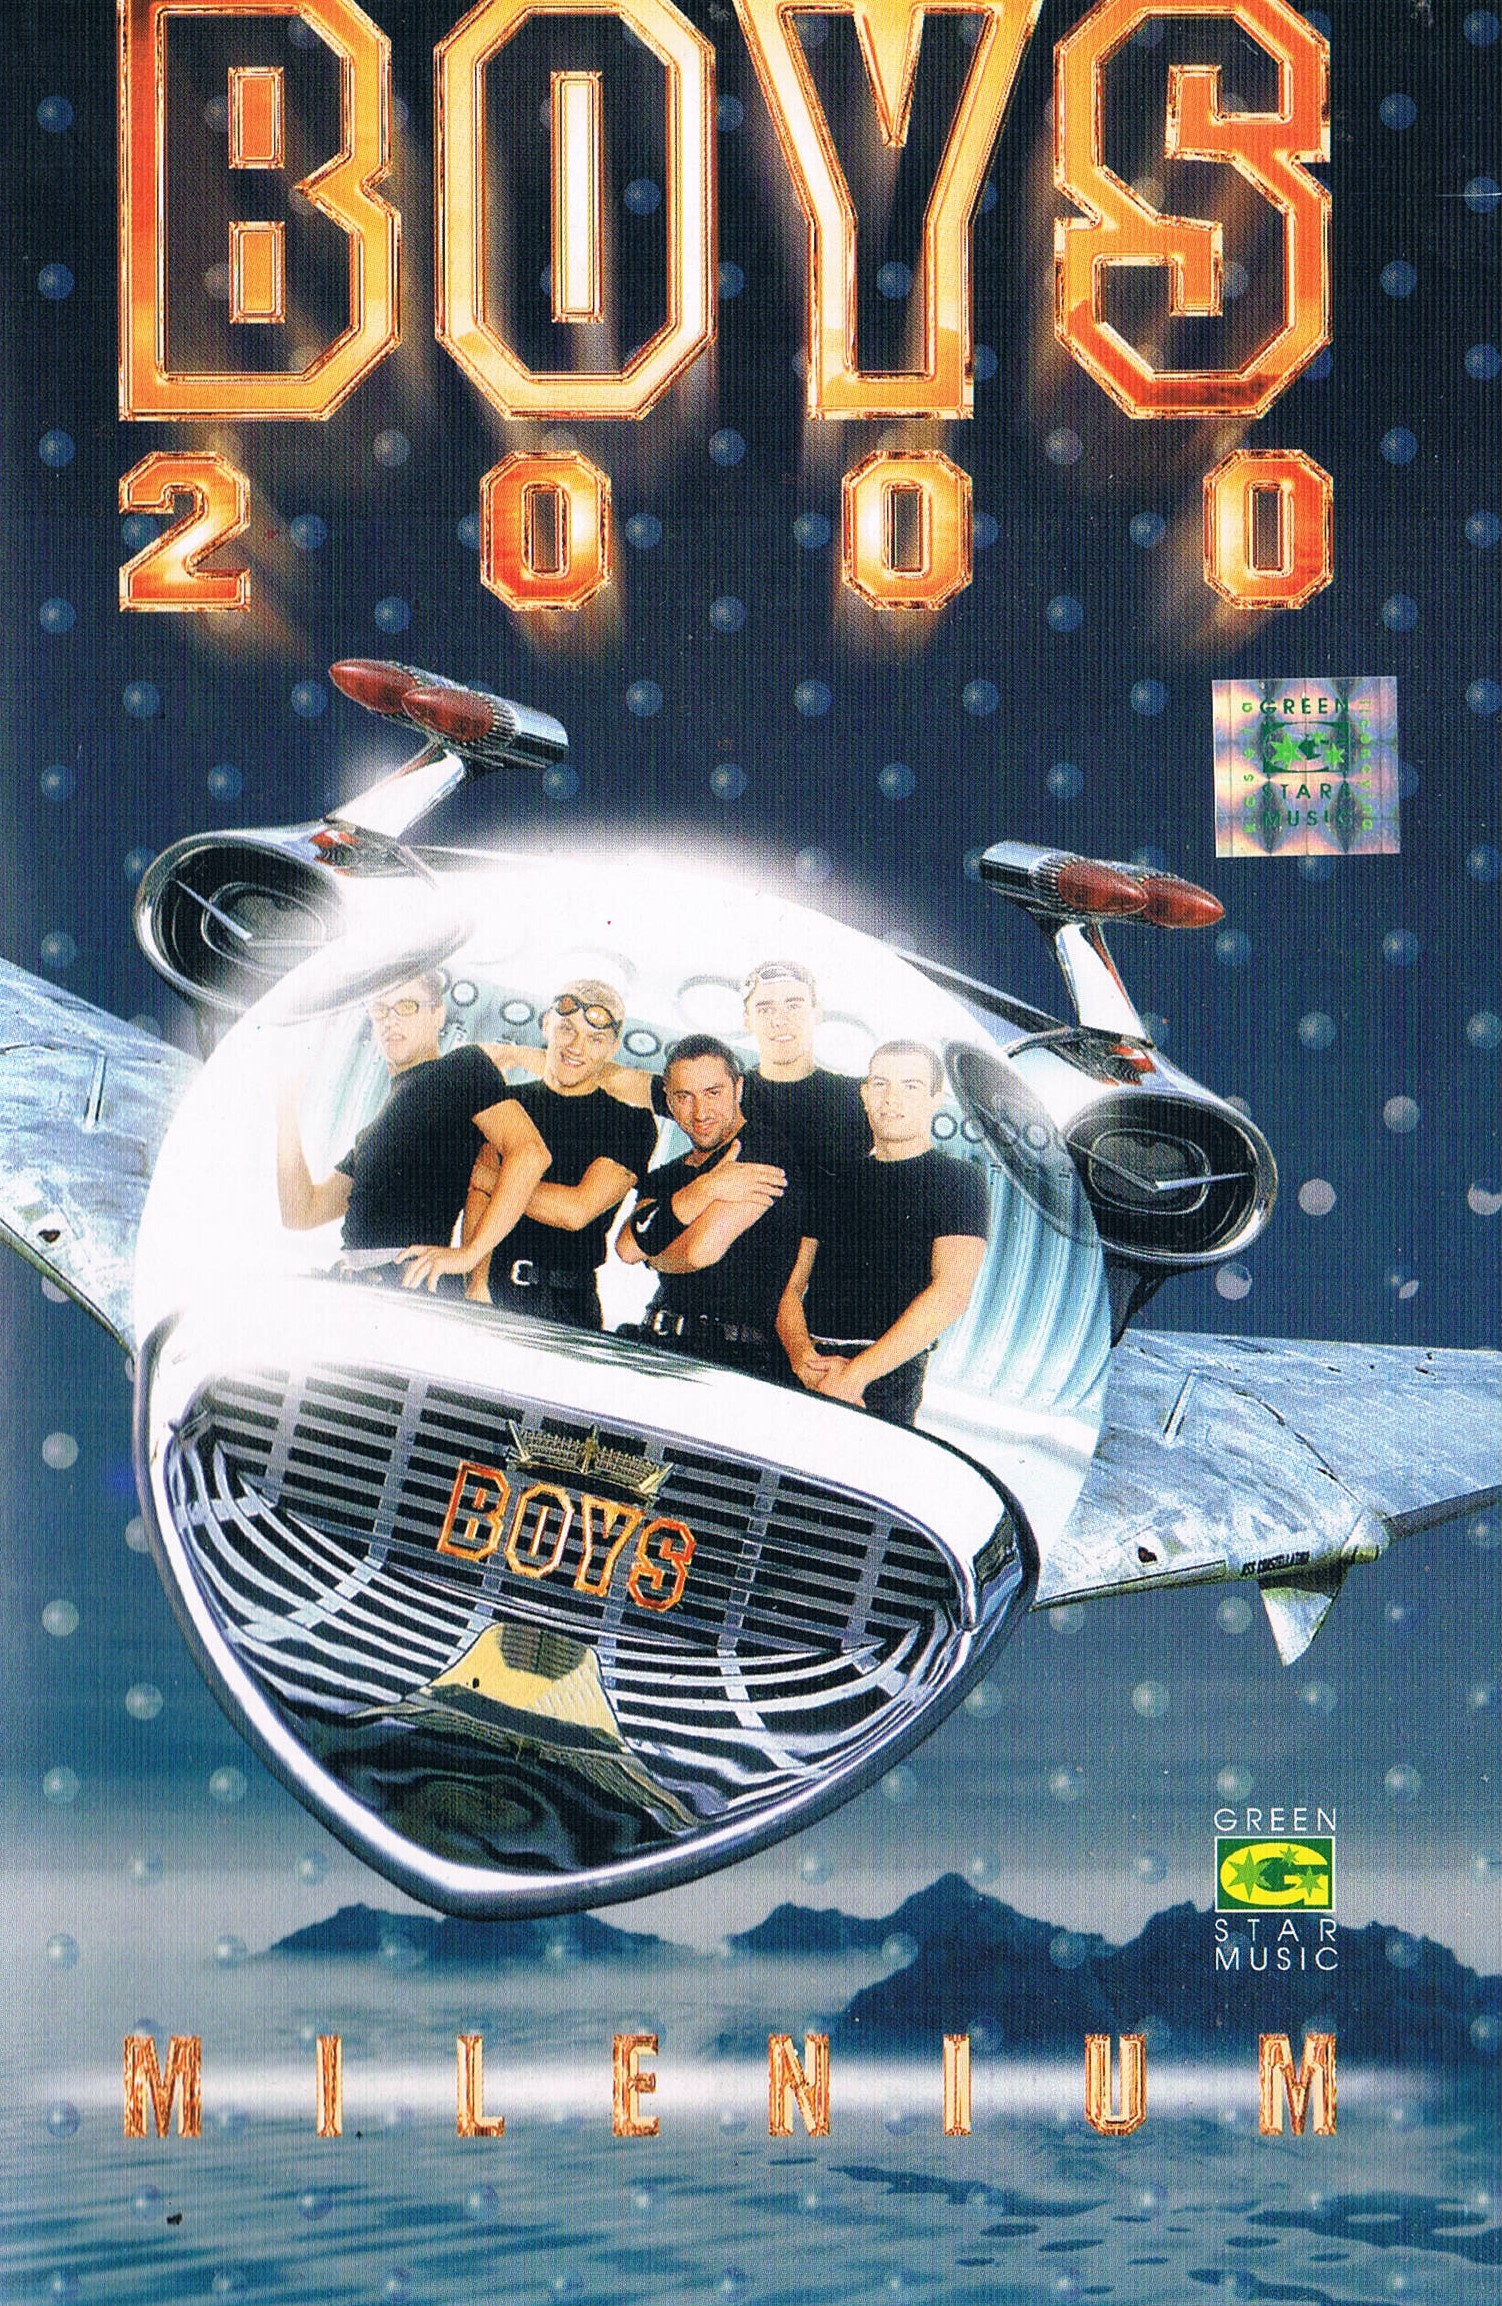 Boys - Milenium 2000 VHS